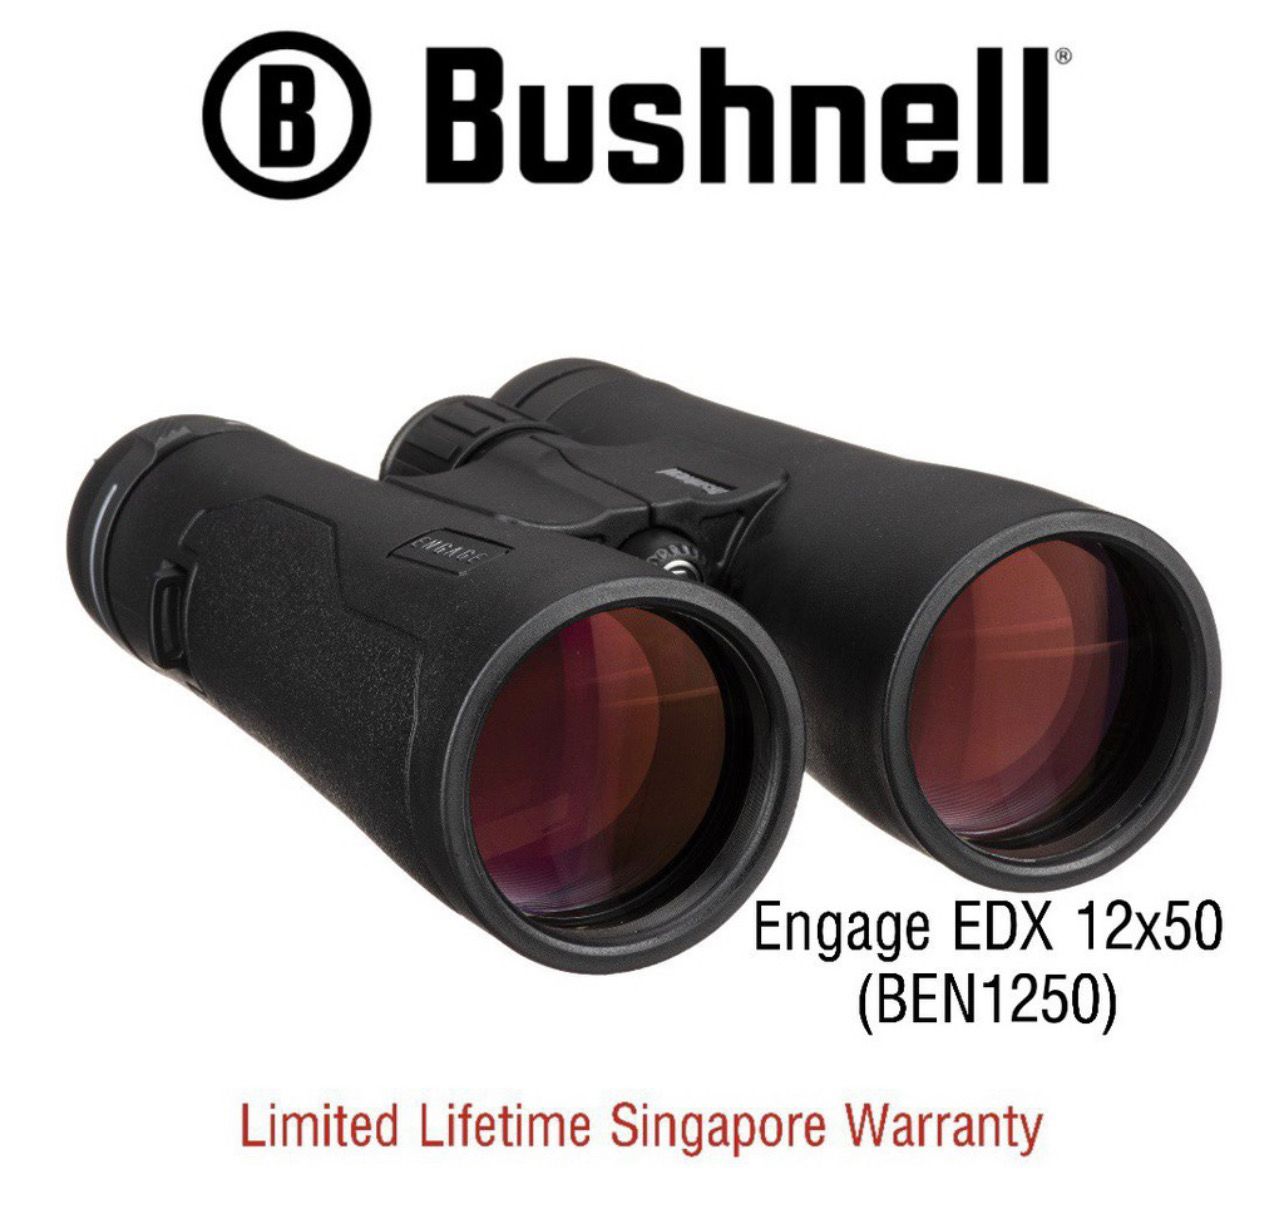 Bushnell Binoculars Engage EDX 12x50 (BEN1250) - Limited Lifetime Warranty